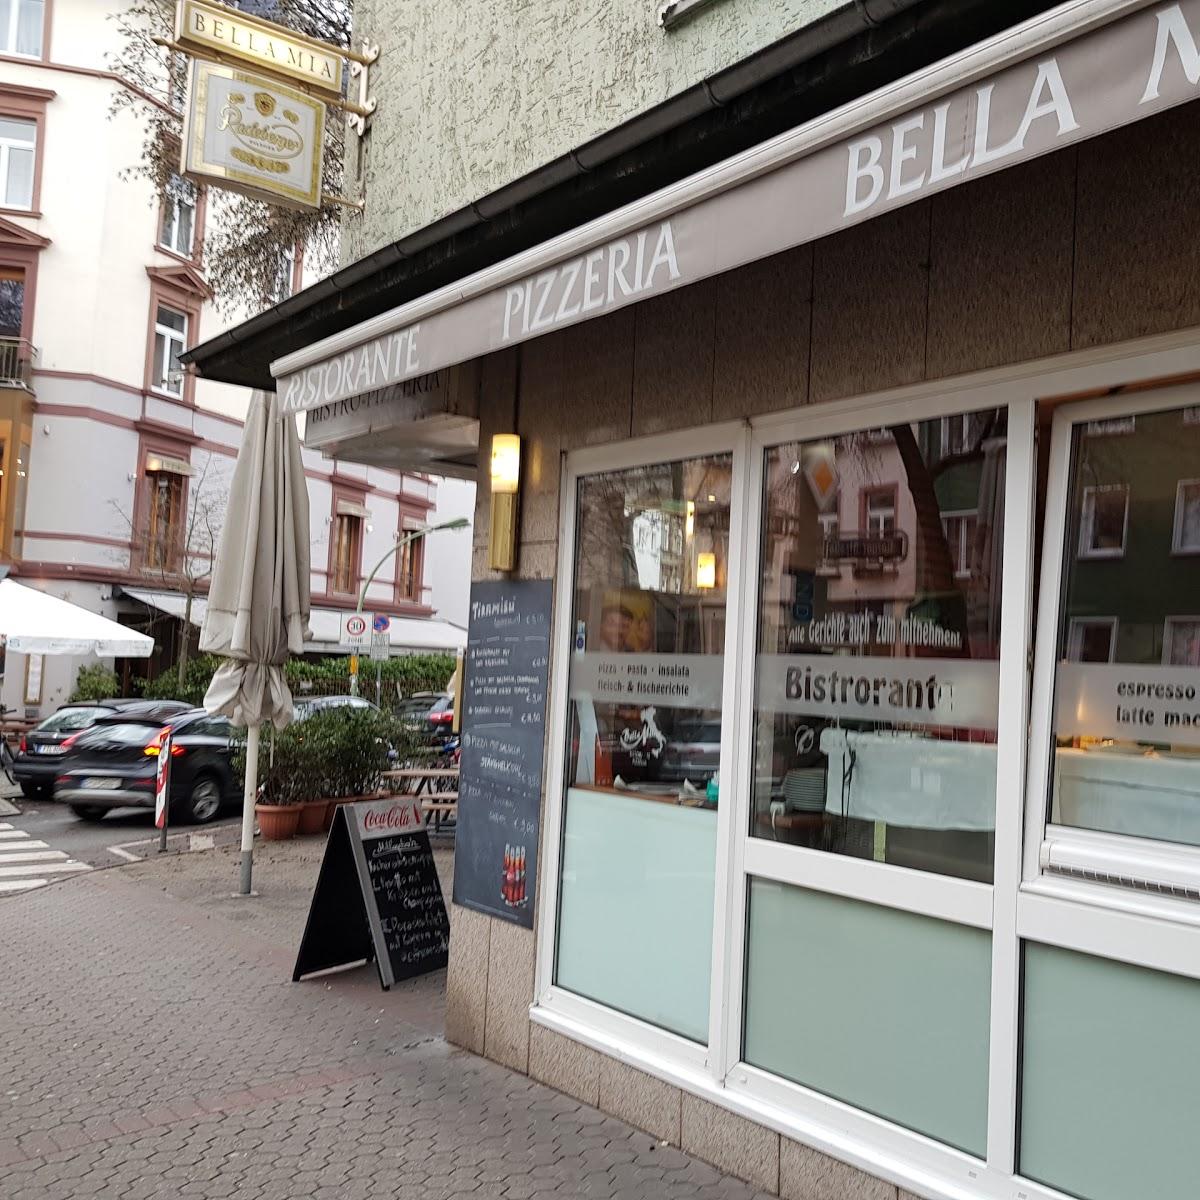 Restaurant "Bella Mia" in Frankfurt am Main